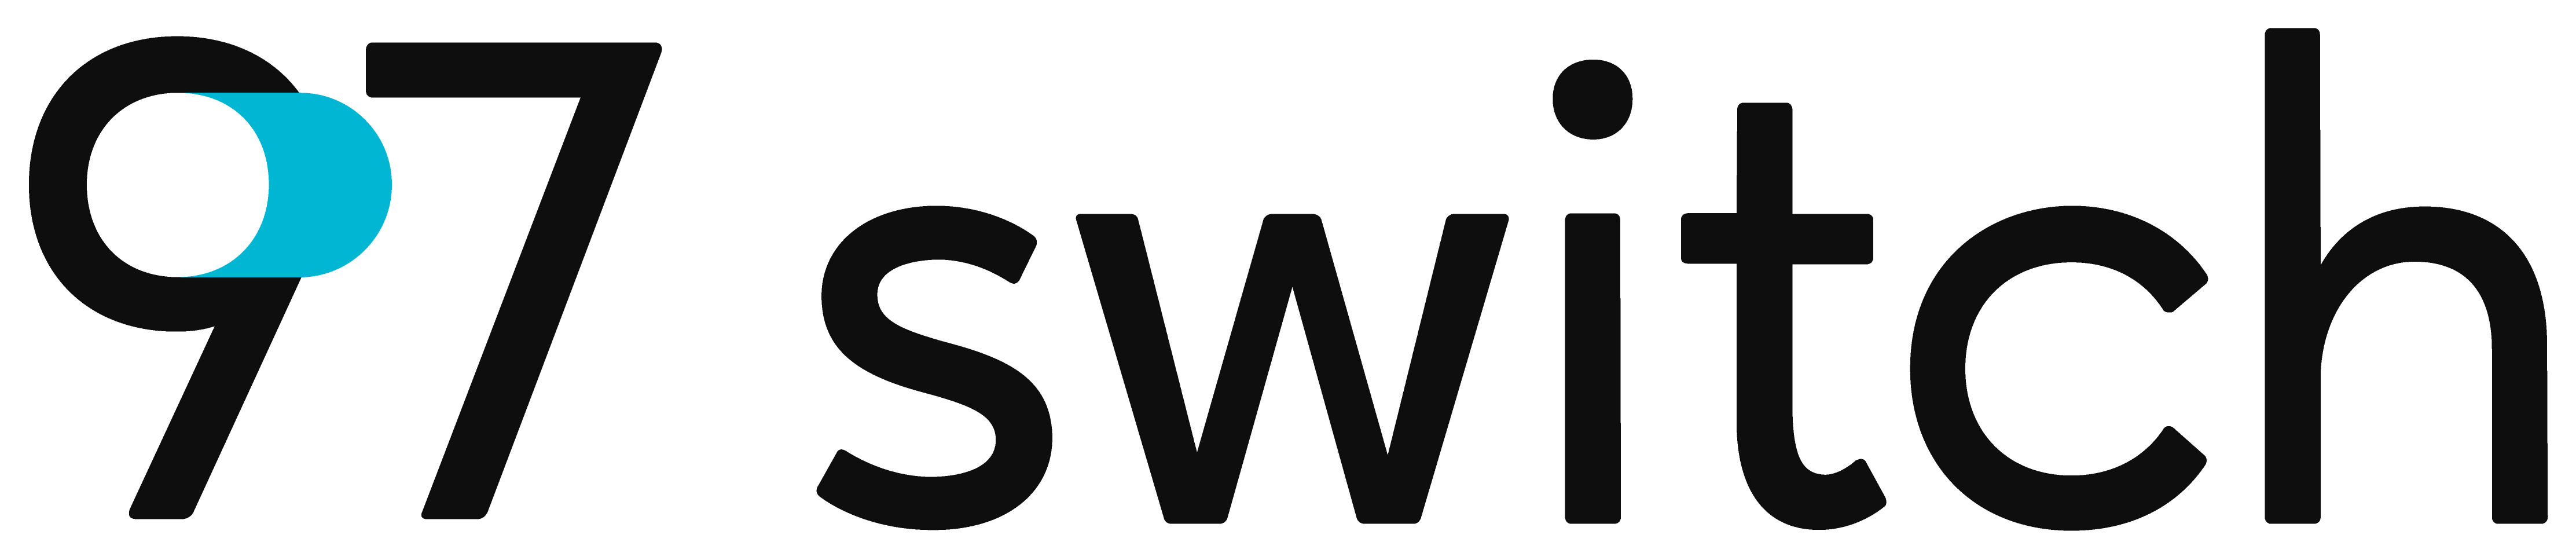 Best BigCommerce Design Agency Logo: 97 Switch